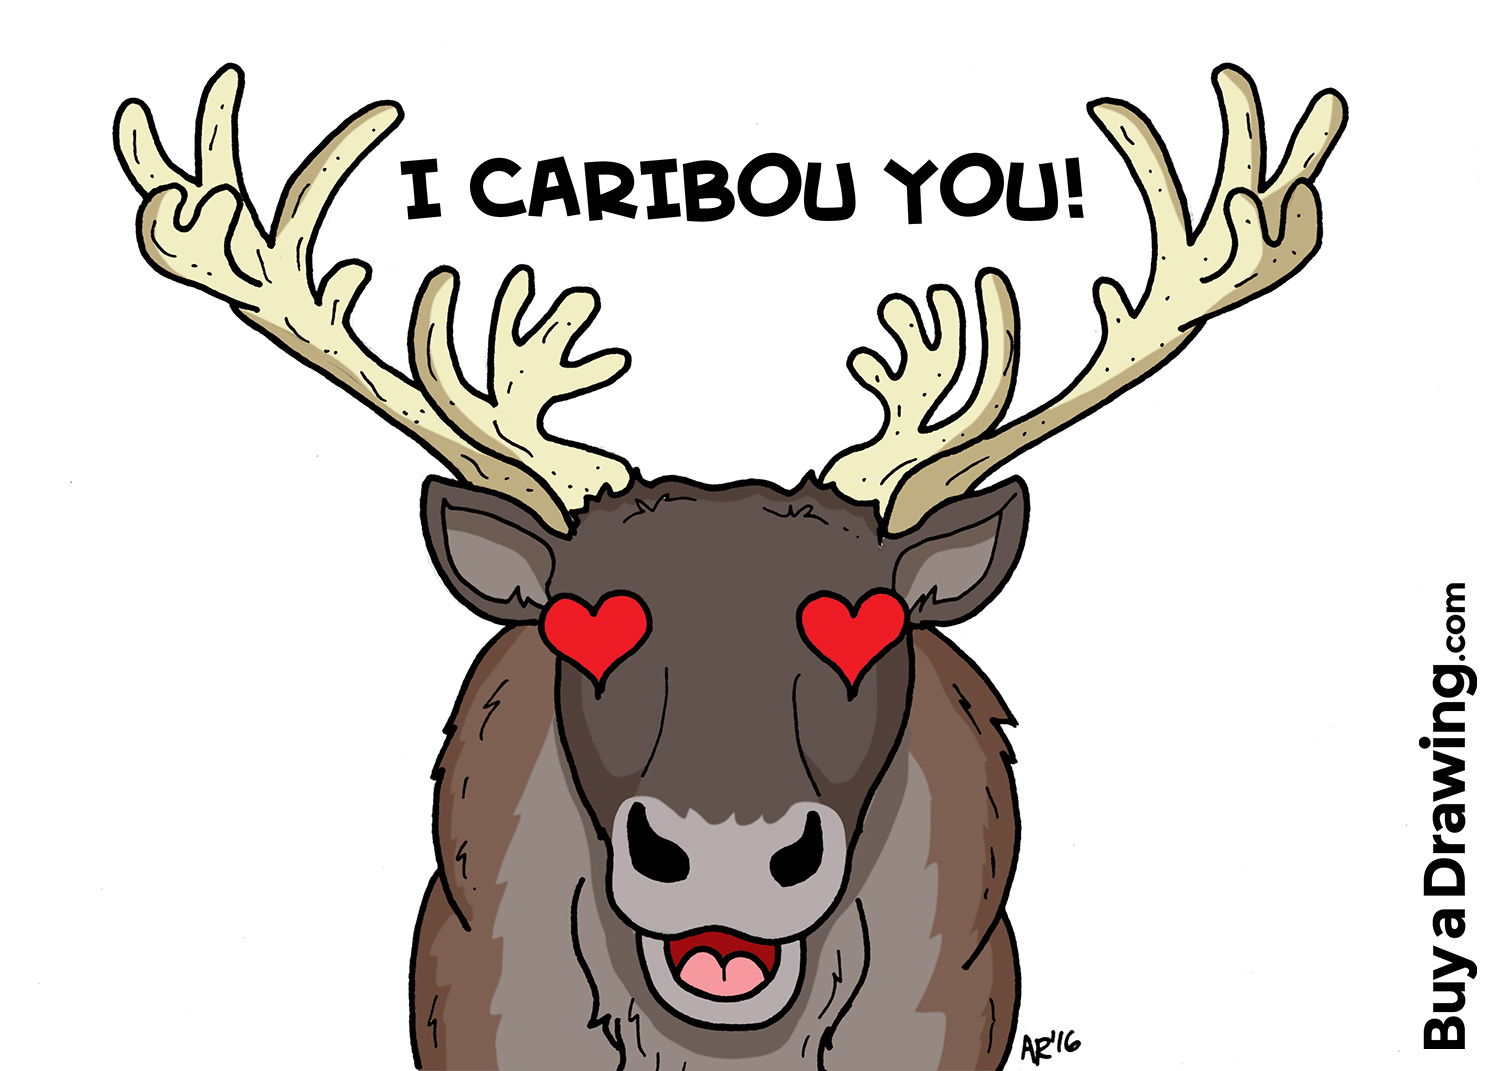 I Love You Caribou Cartoon Drawing - "I Caribou You!"